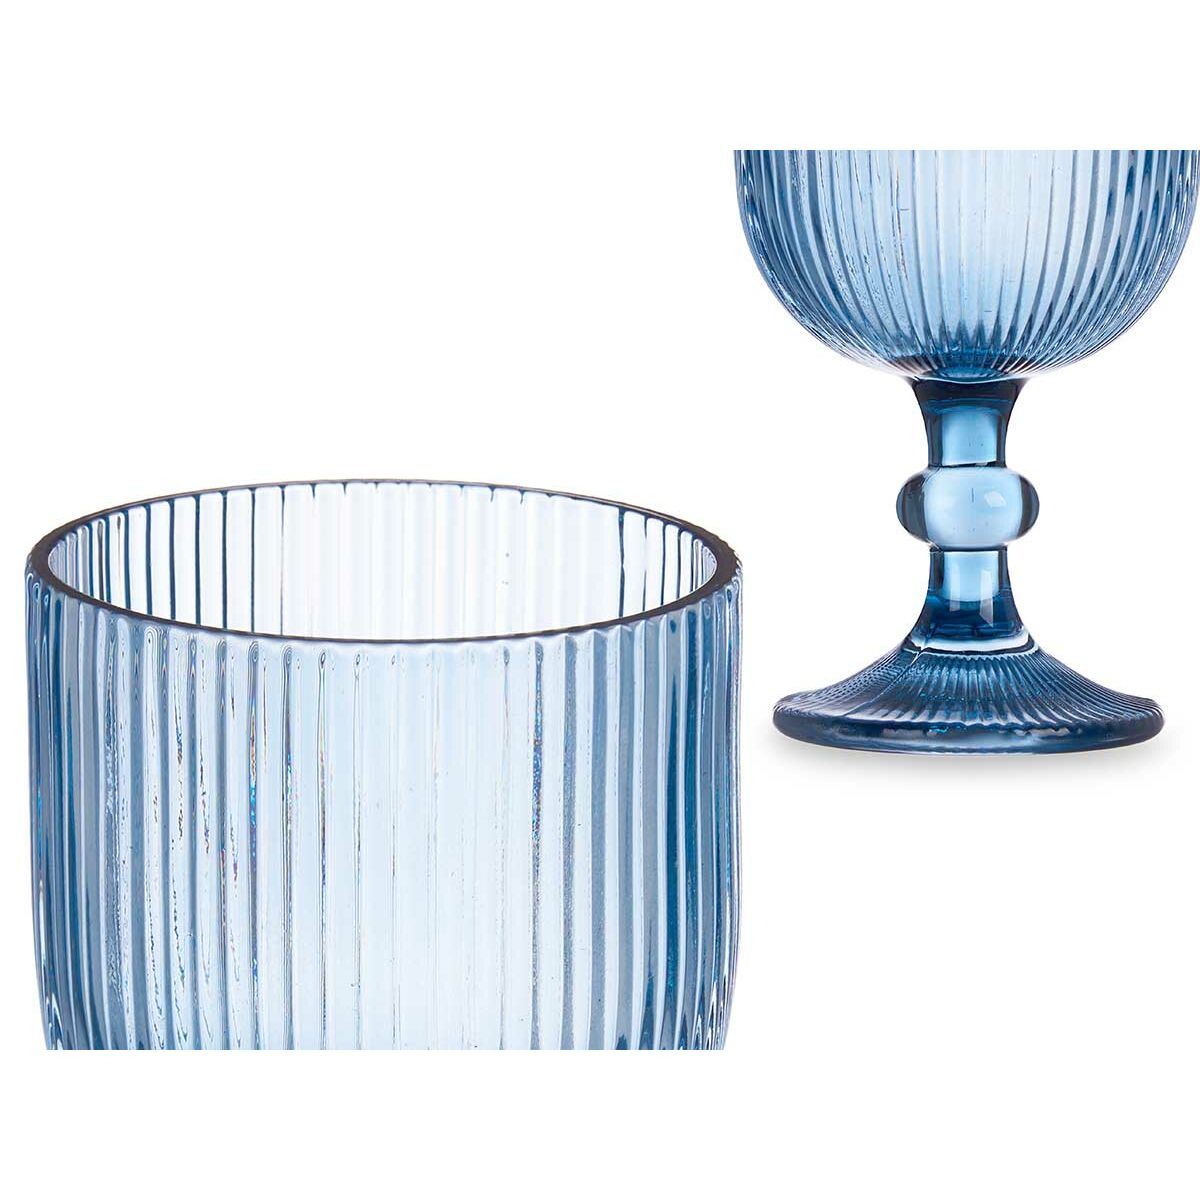 Fluitglas Strepen Blauw Glas 370 ml (6 Stuks)